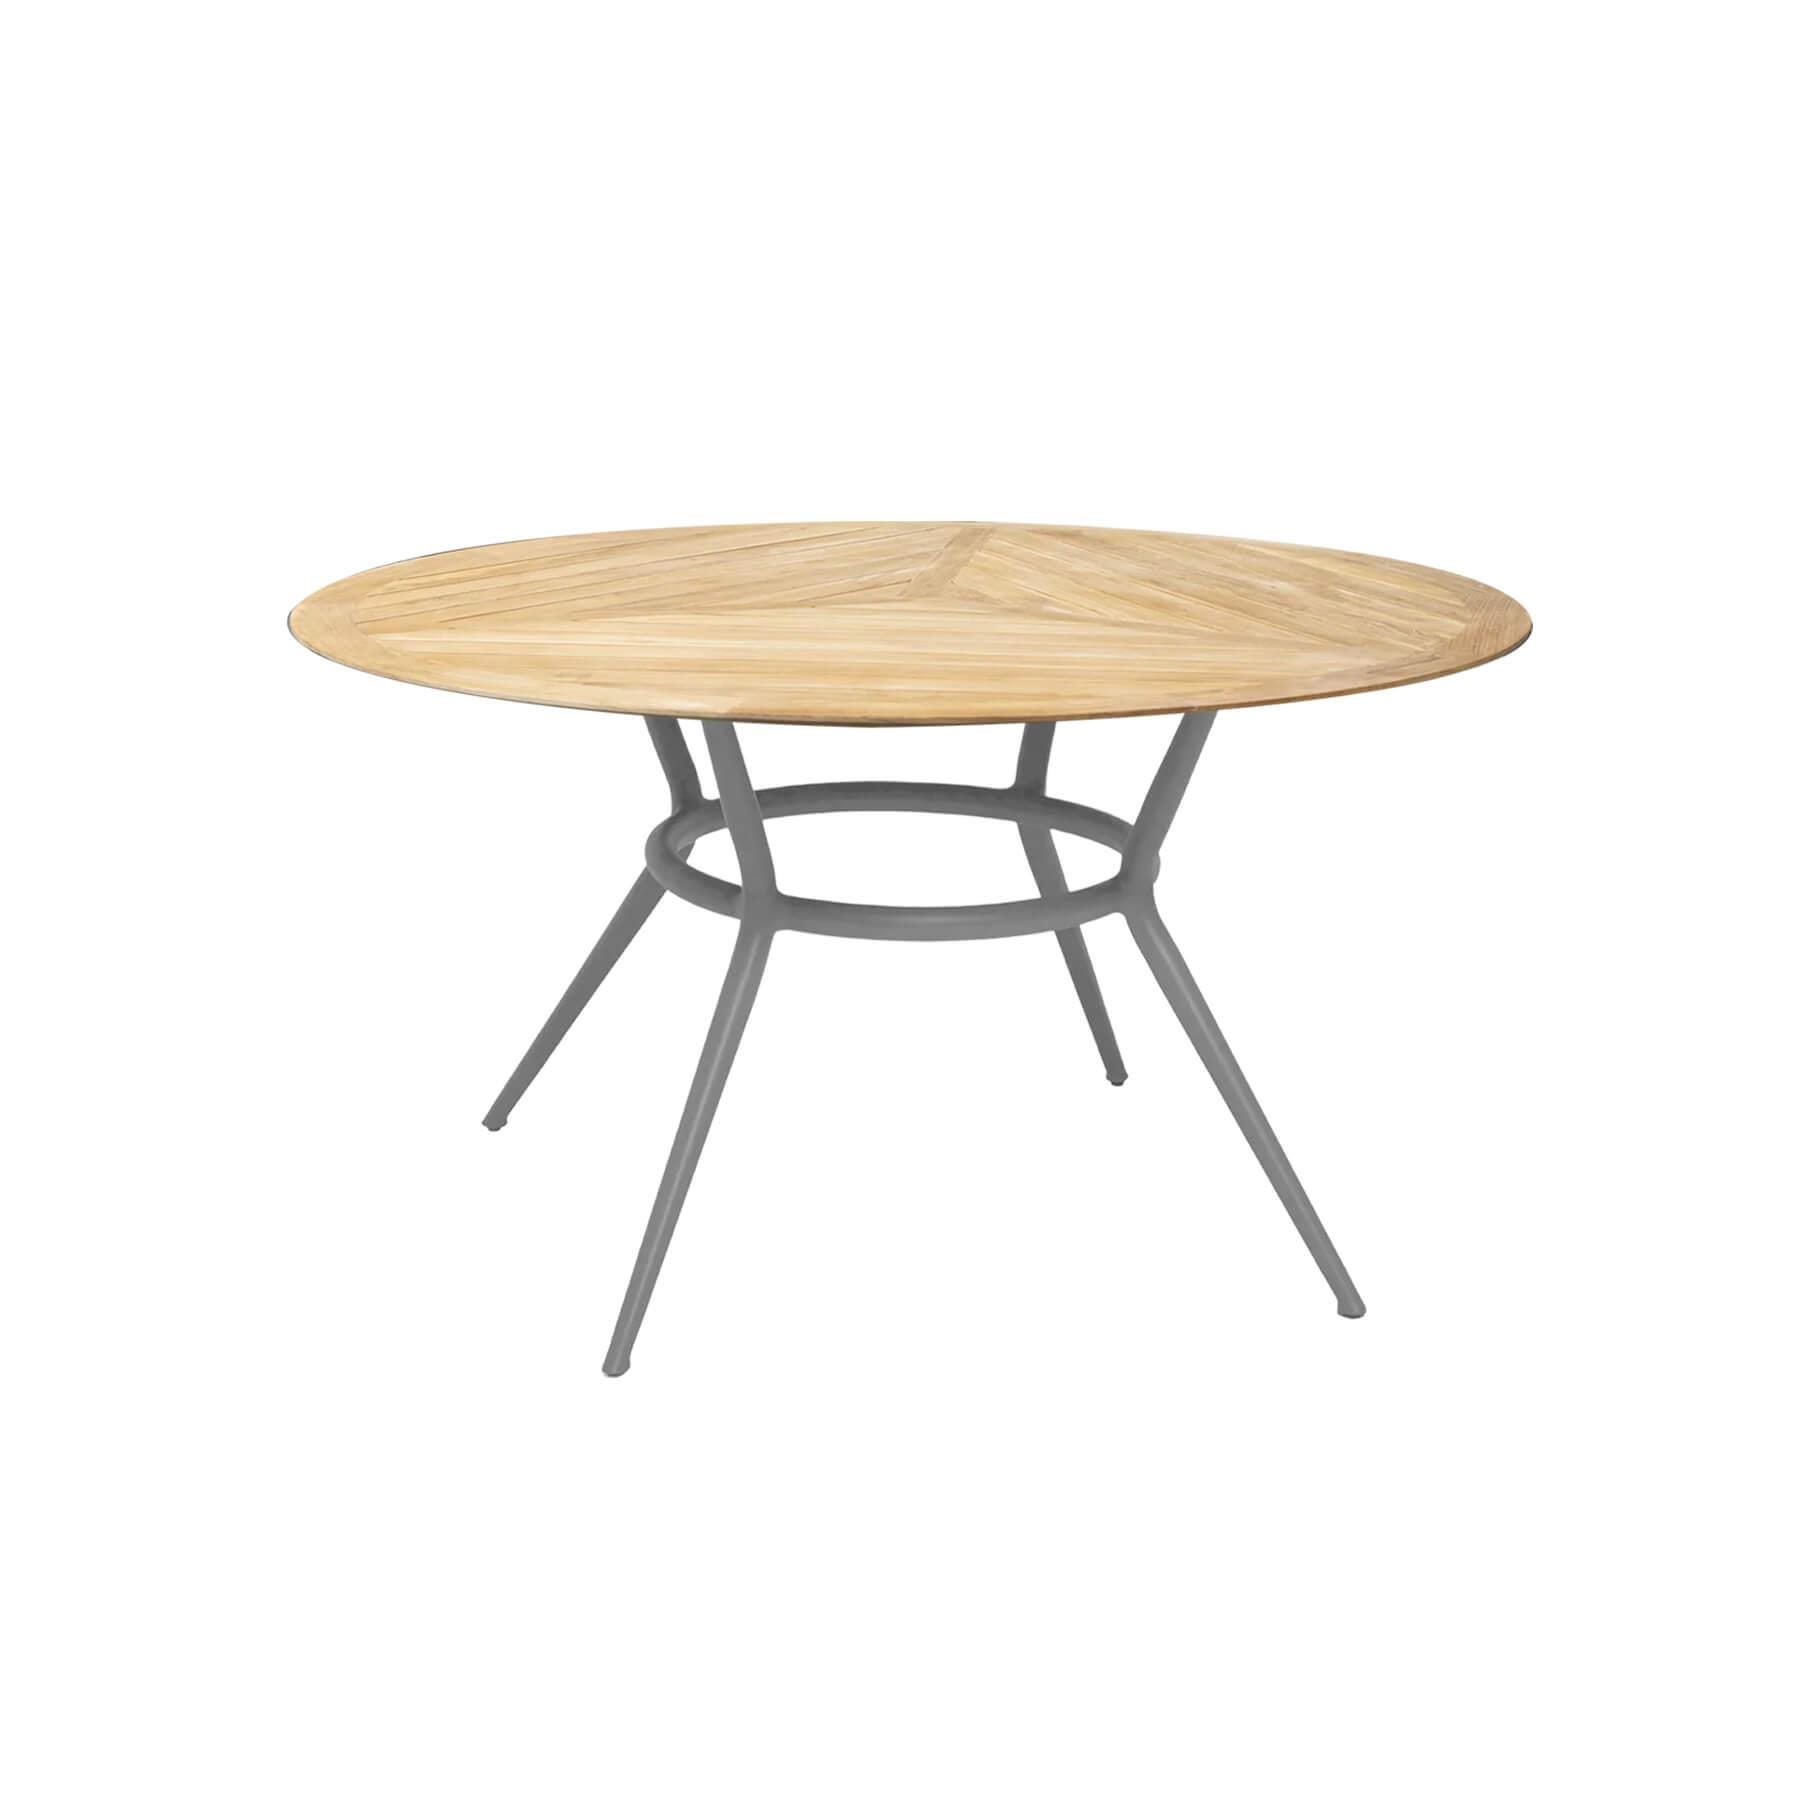 Caneline Joy Outdoor Dining Table Round Small Teak Top Light Grey Legs Light Wood